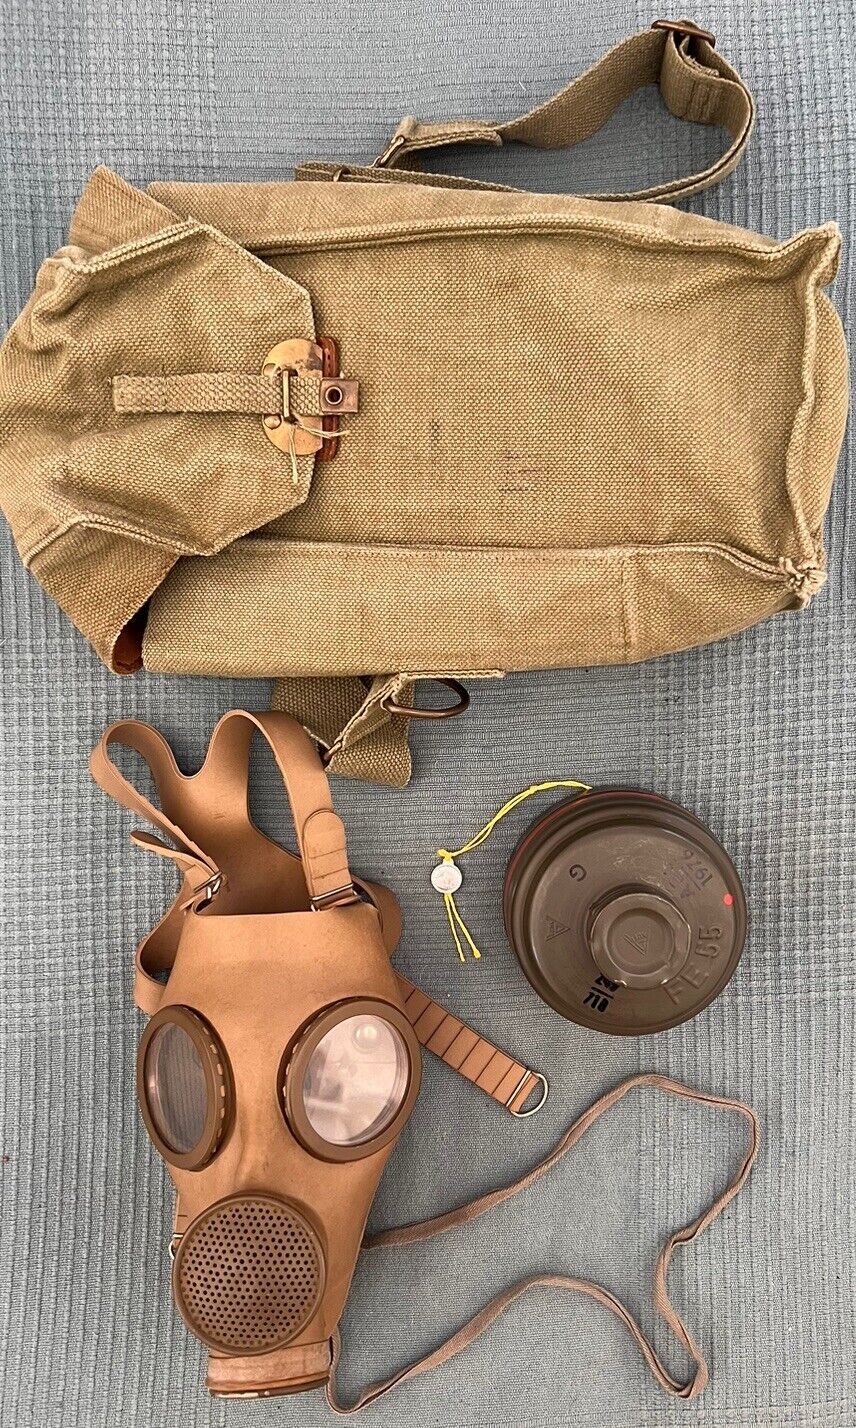 VTG Belgian Military WWII M51 Gas Mask w/ Carry Bag & Cartridge EUC Rare